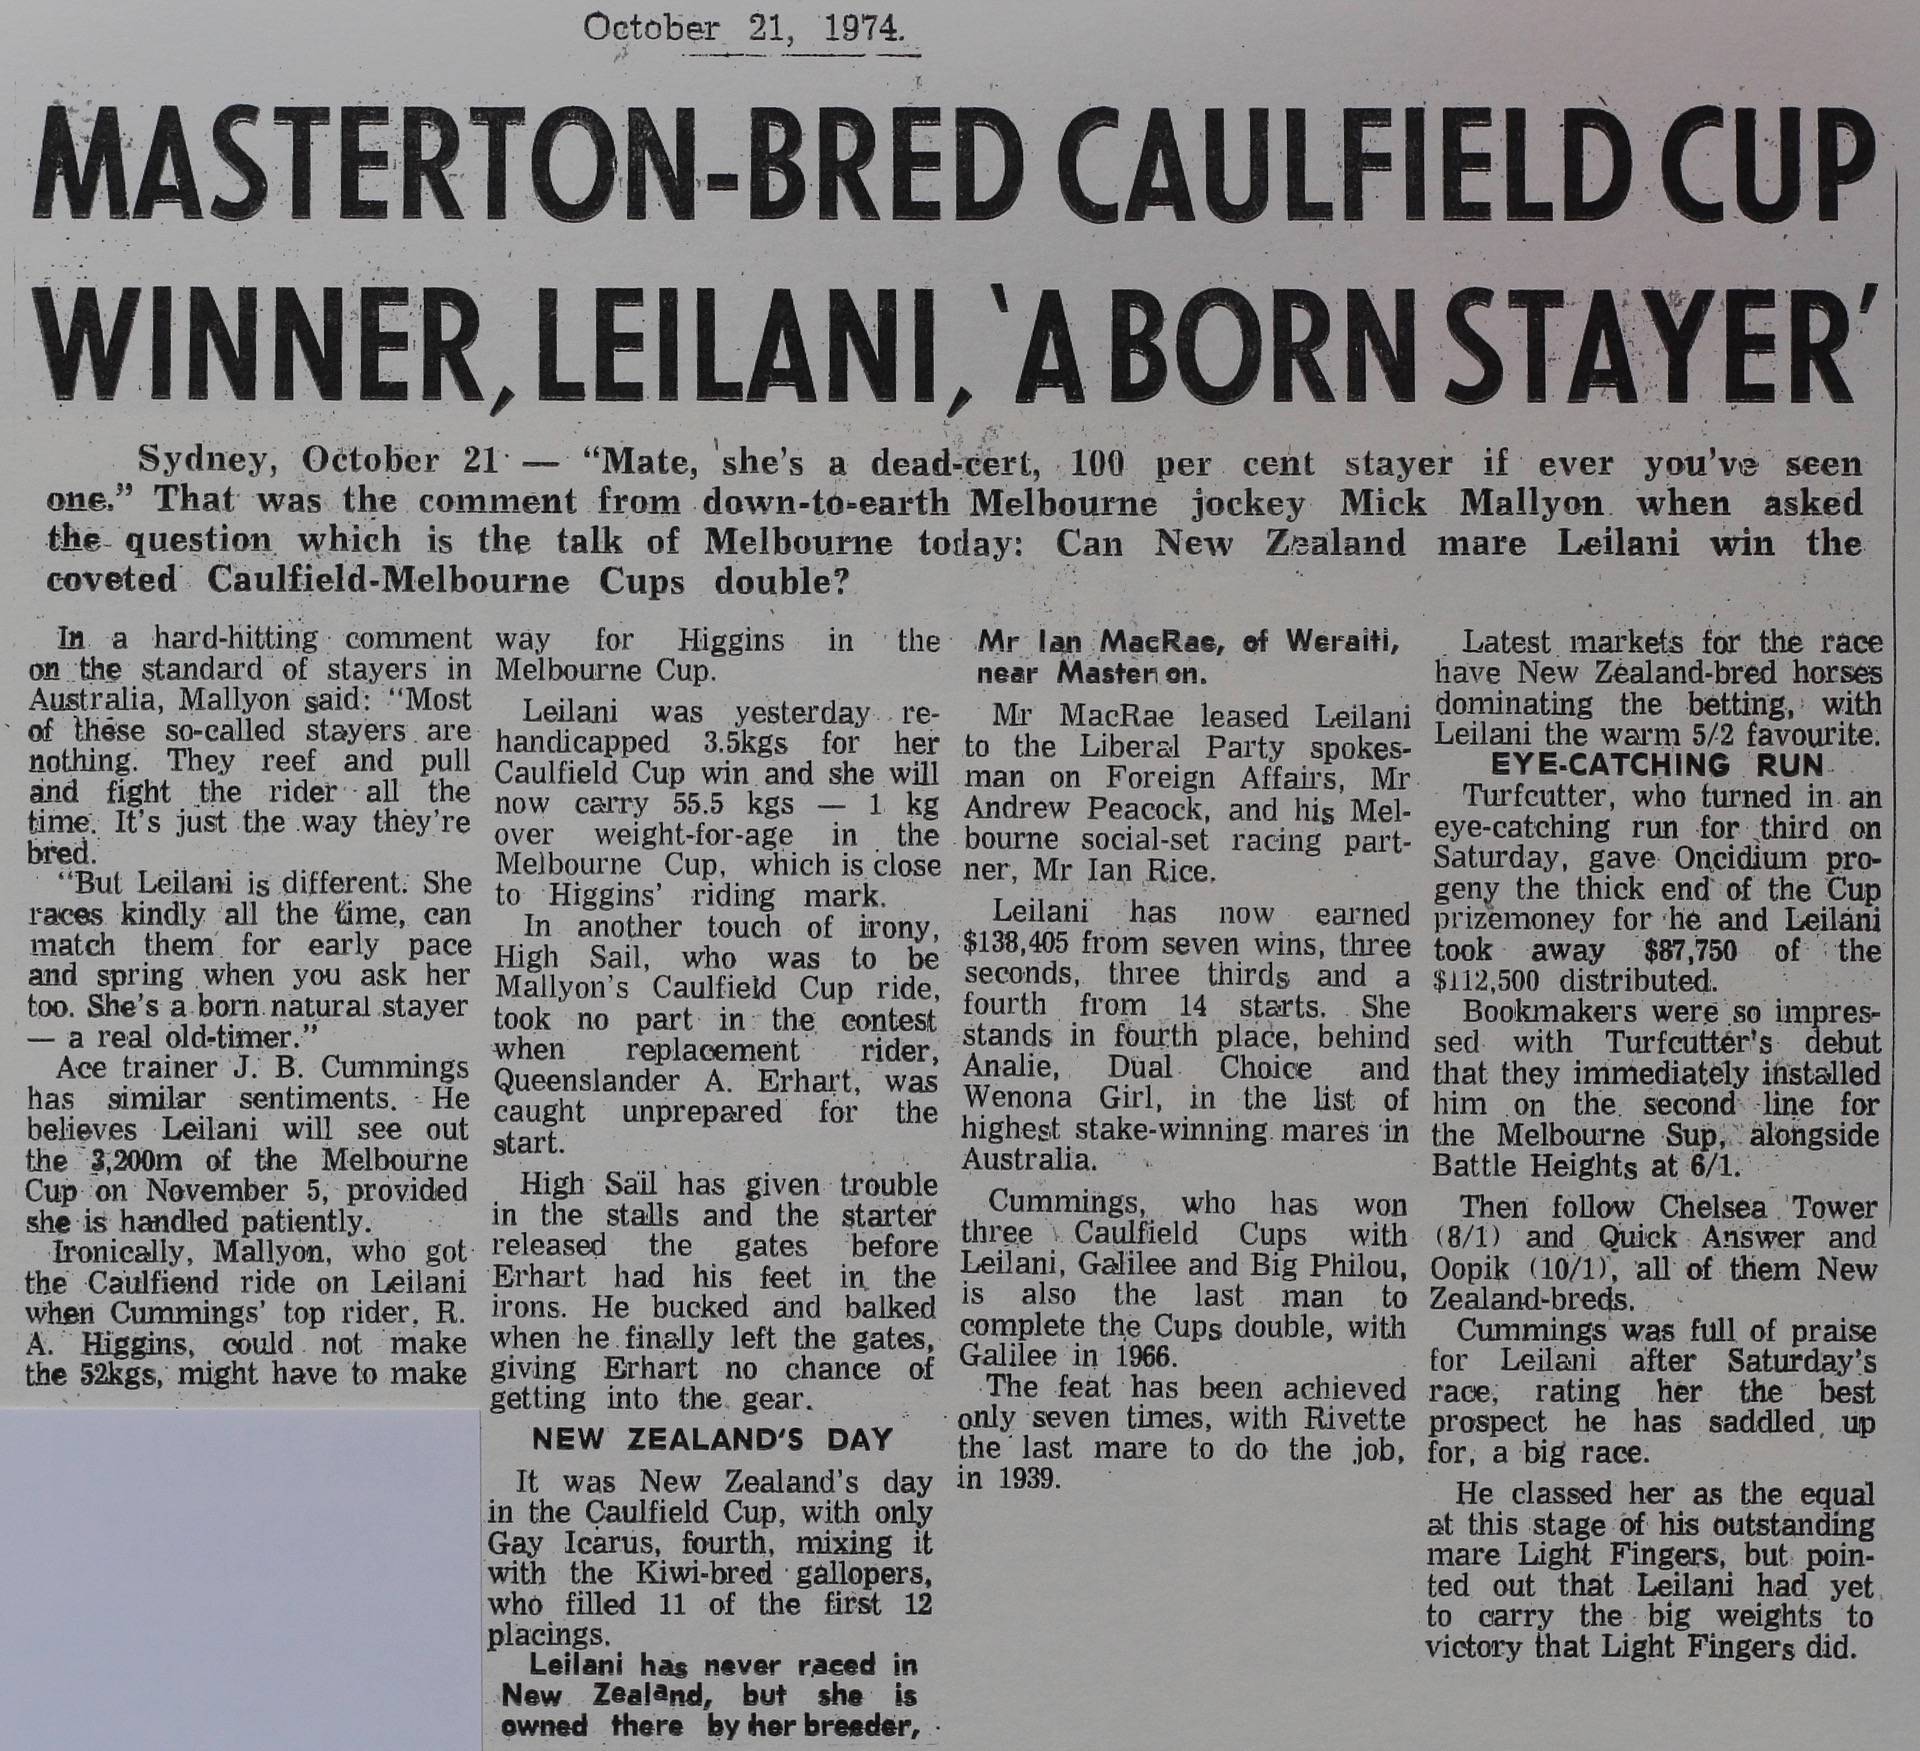 Masterton-bred Caulfield Cup winner, Leilani, 'a born stayer'